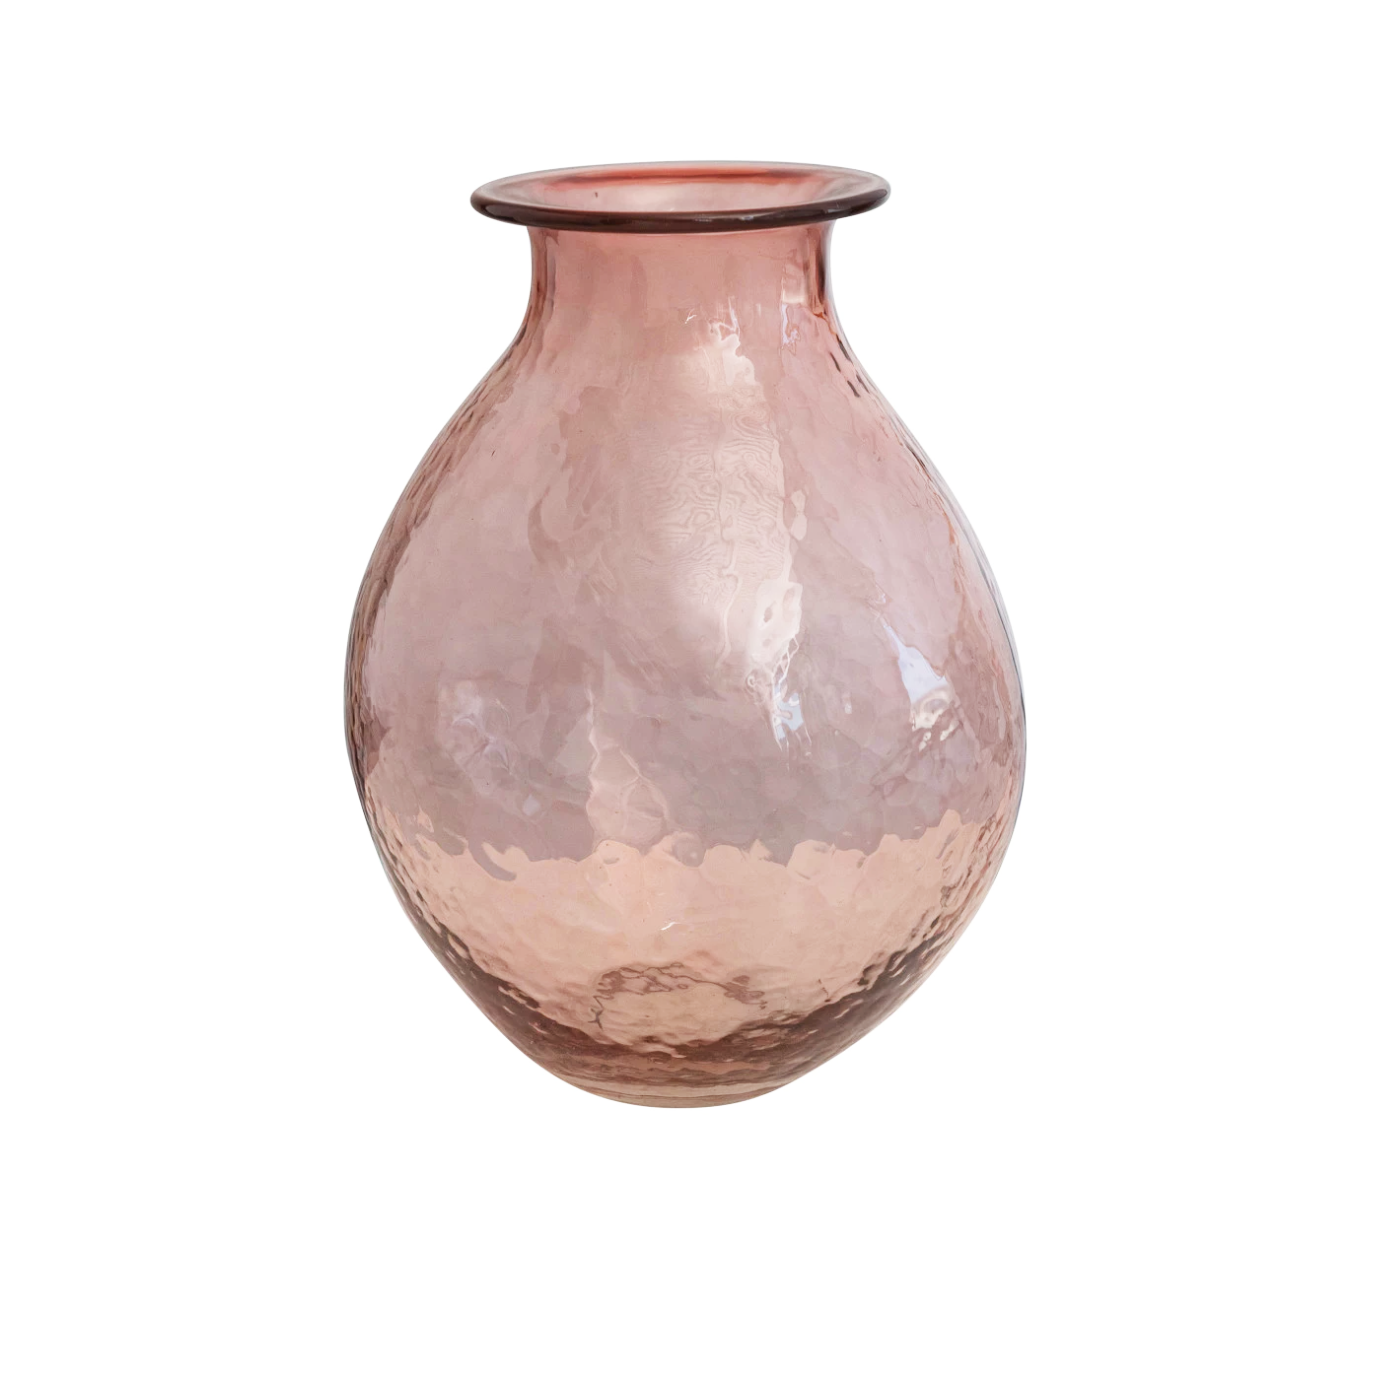 Rose Colored Glass Vase